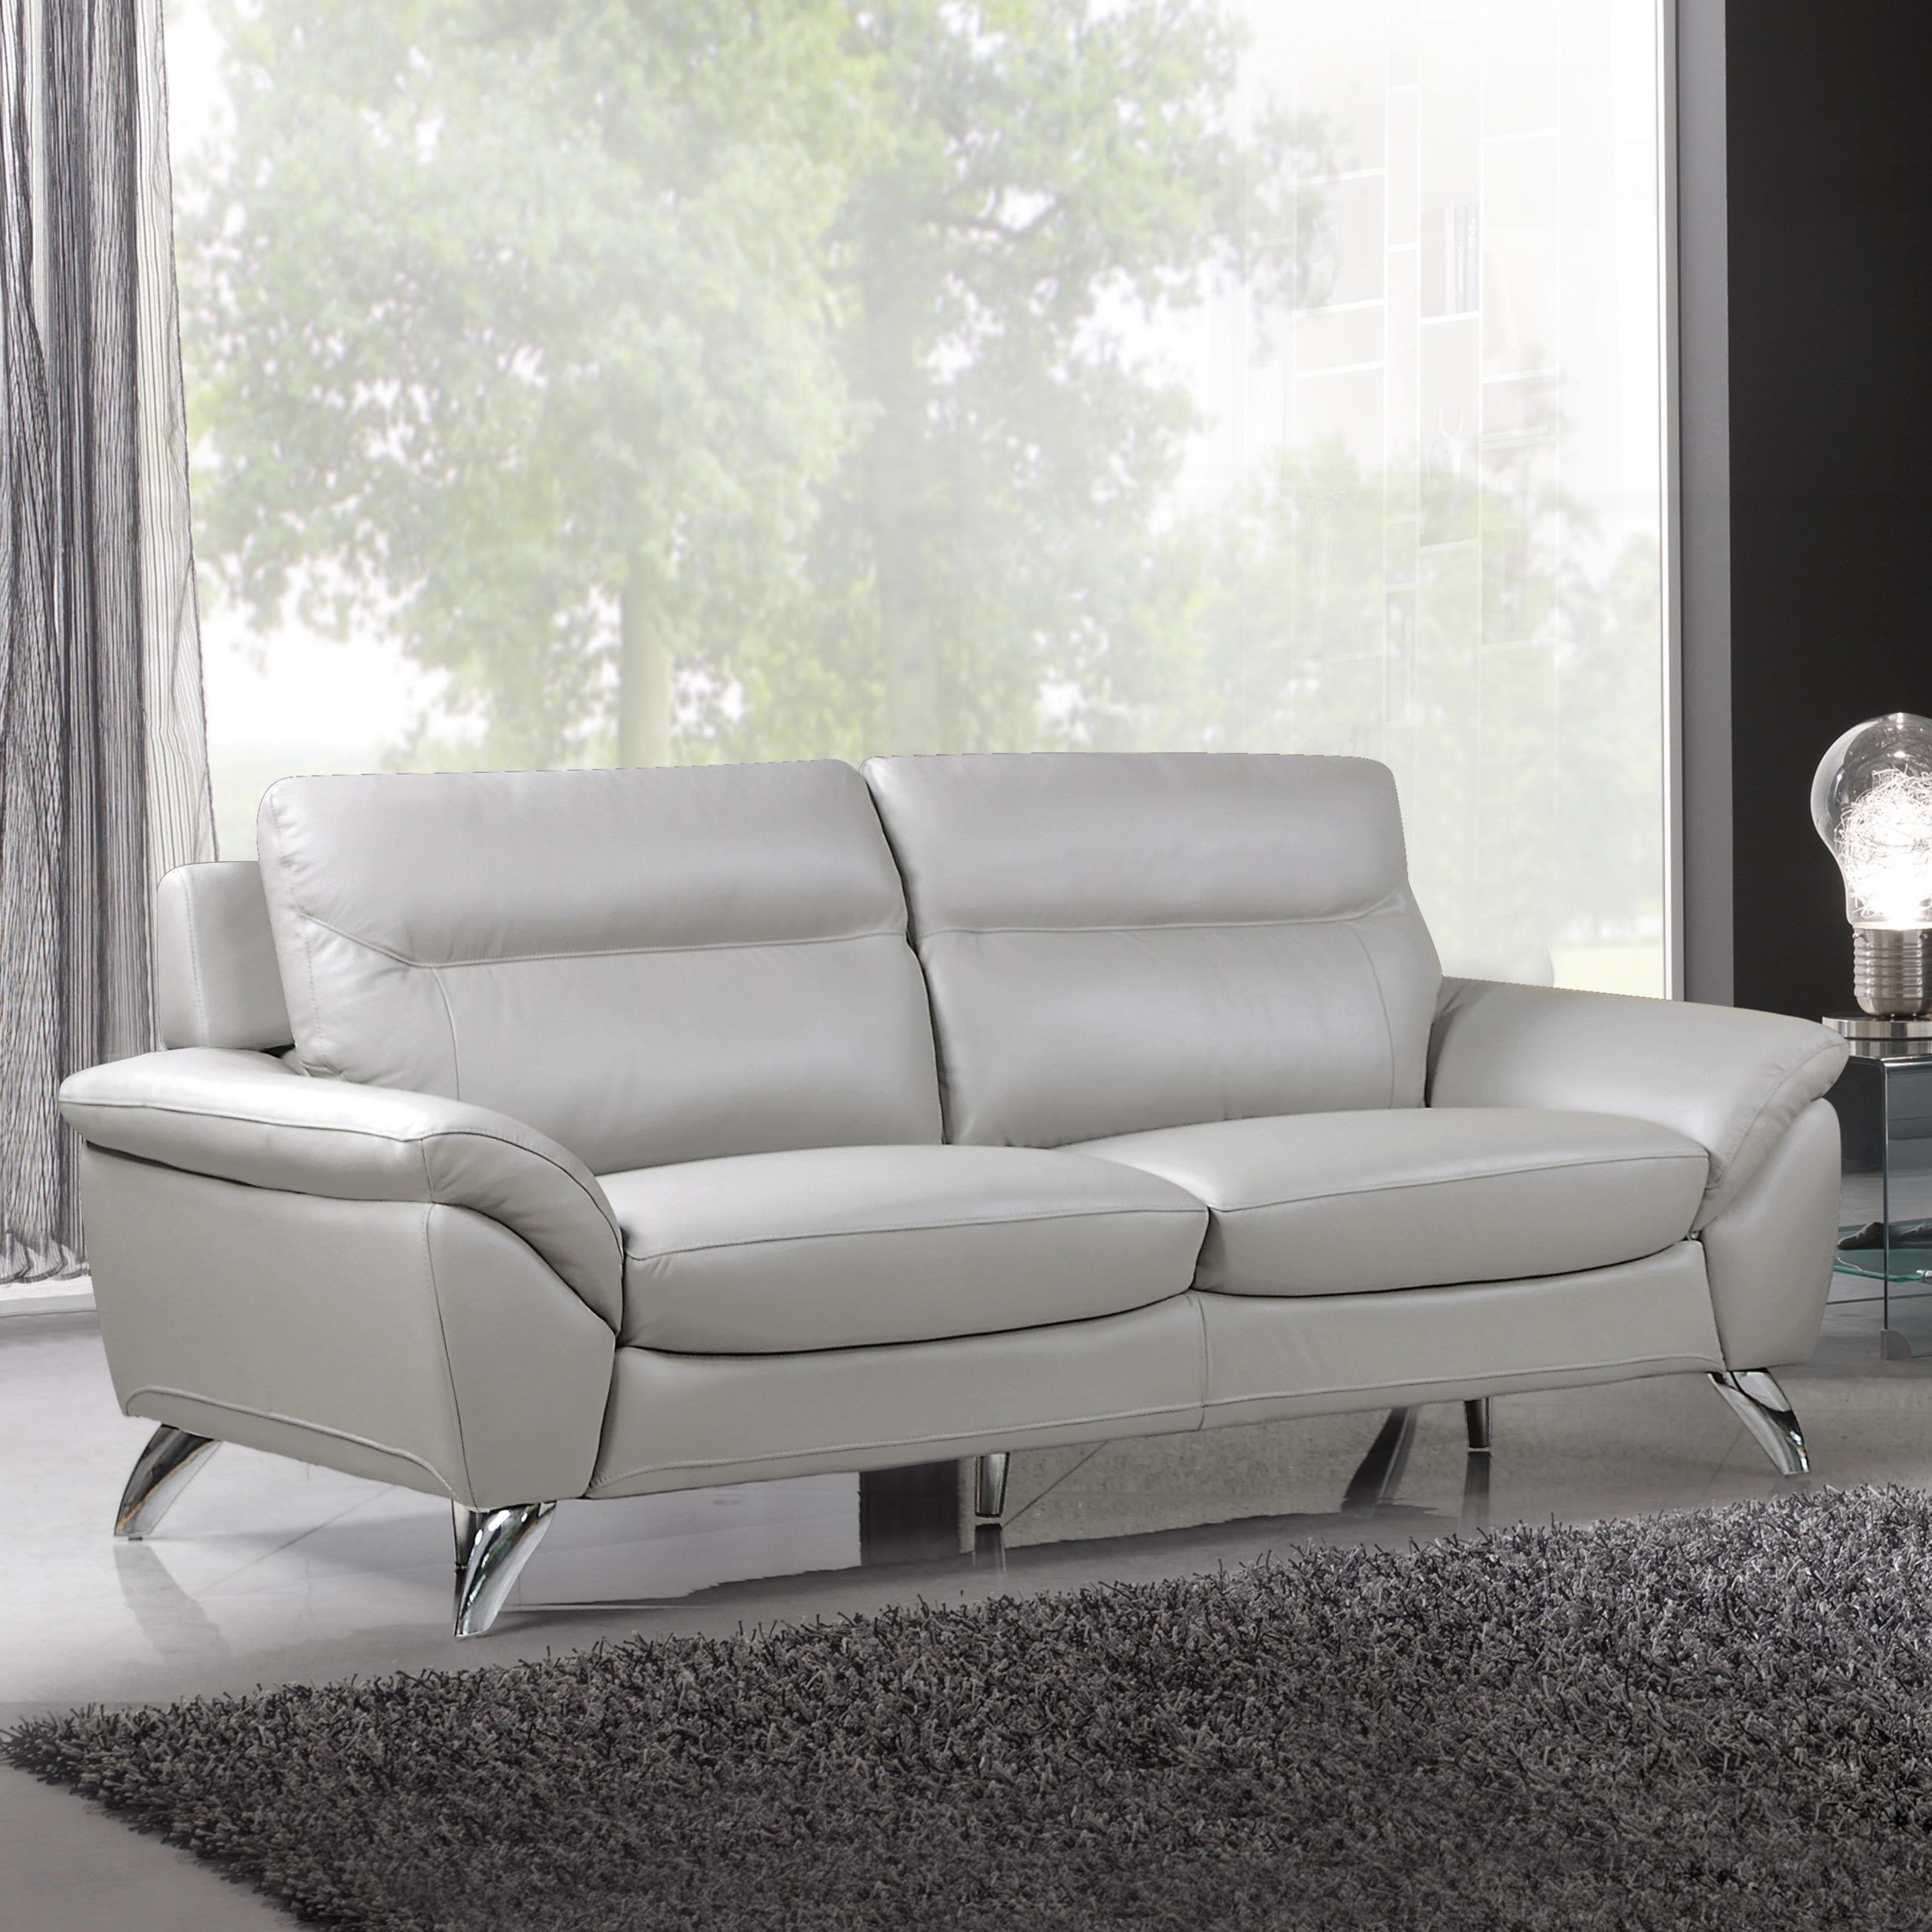 Cortesi Home Contemporary Monaco Genuine Leather Sofa, Light Grey 78 With Regard To Sofas In Light Gray (View 18 of 20)